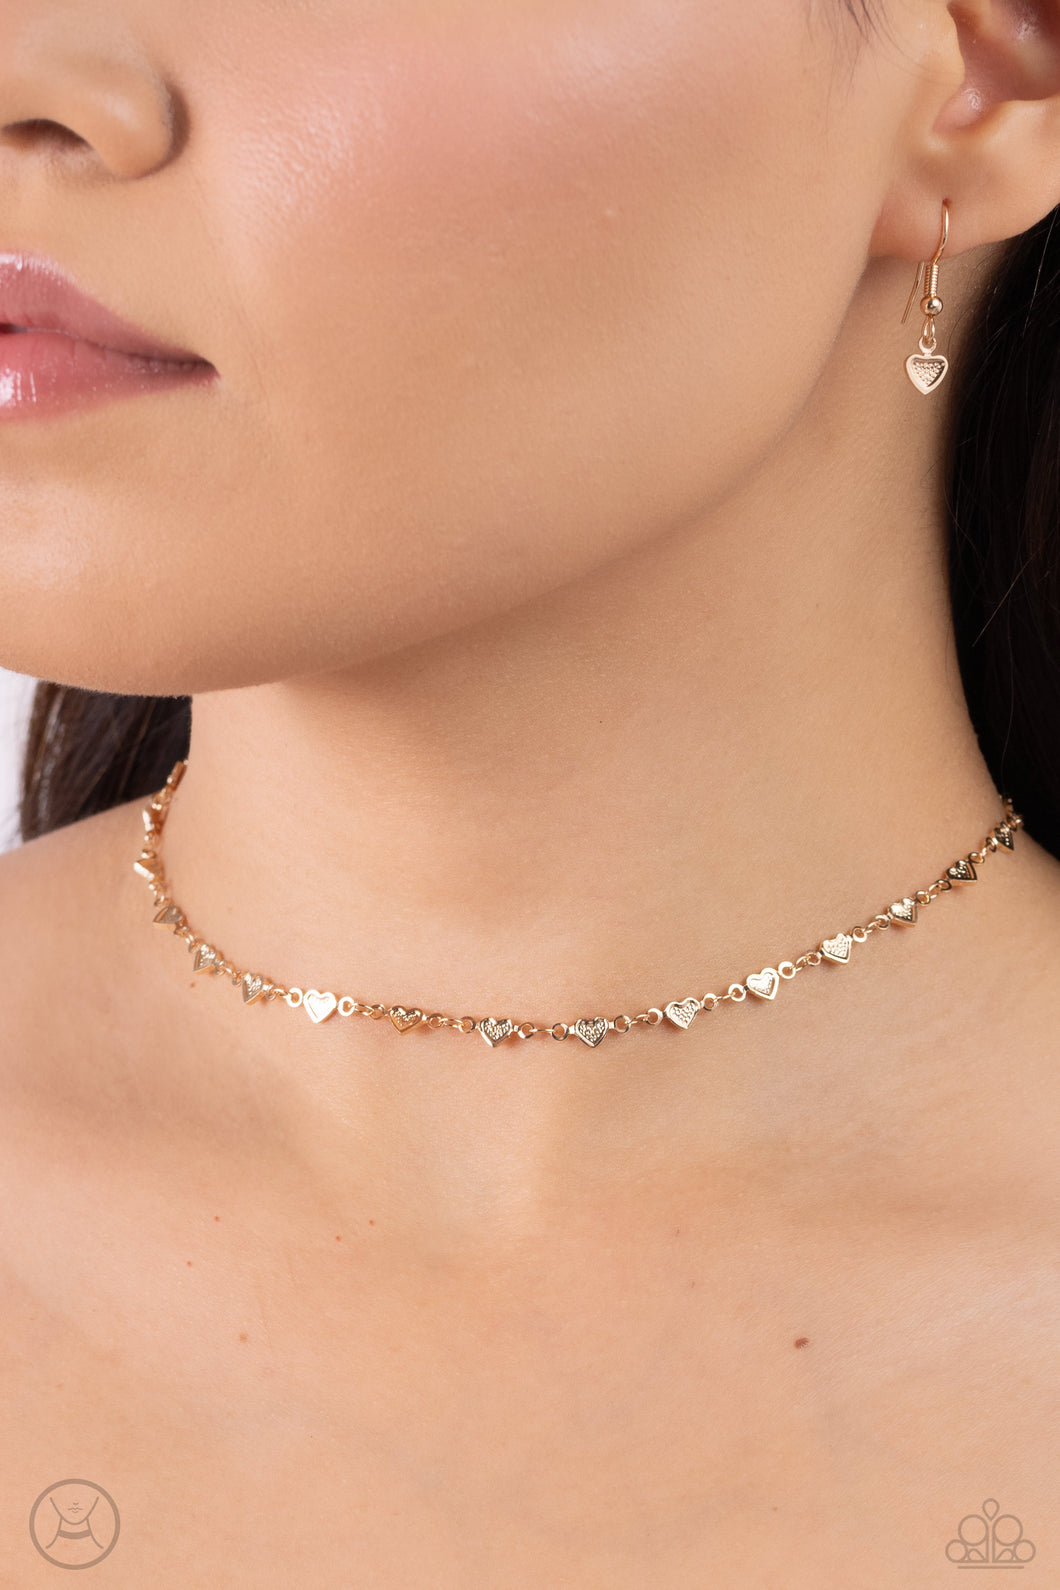 Cupid Catwalk Gold Heart Necklace - Jewelry by Bretta